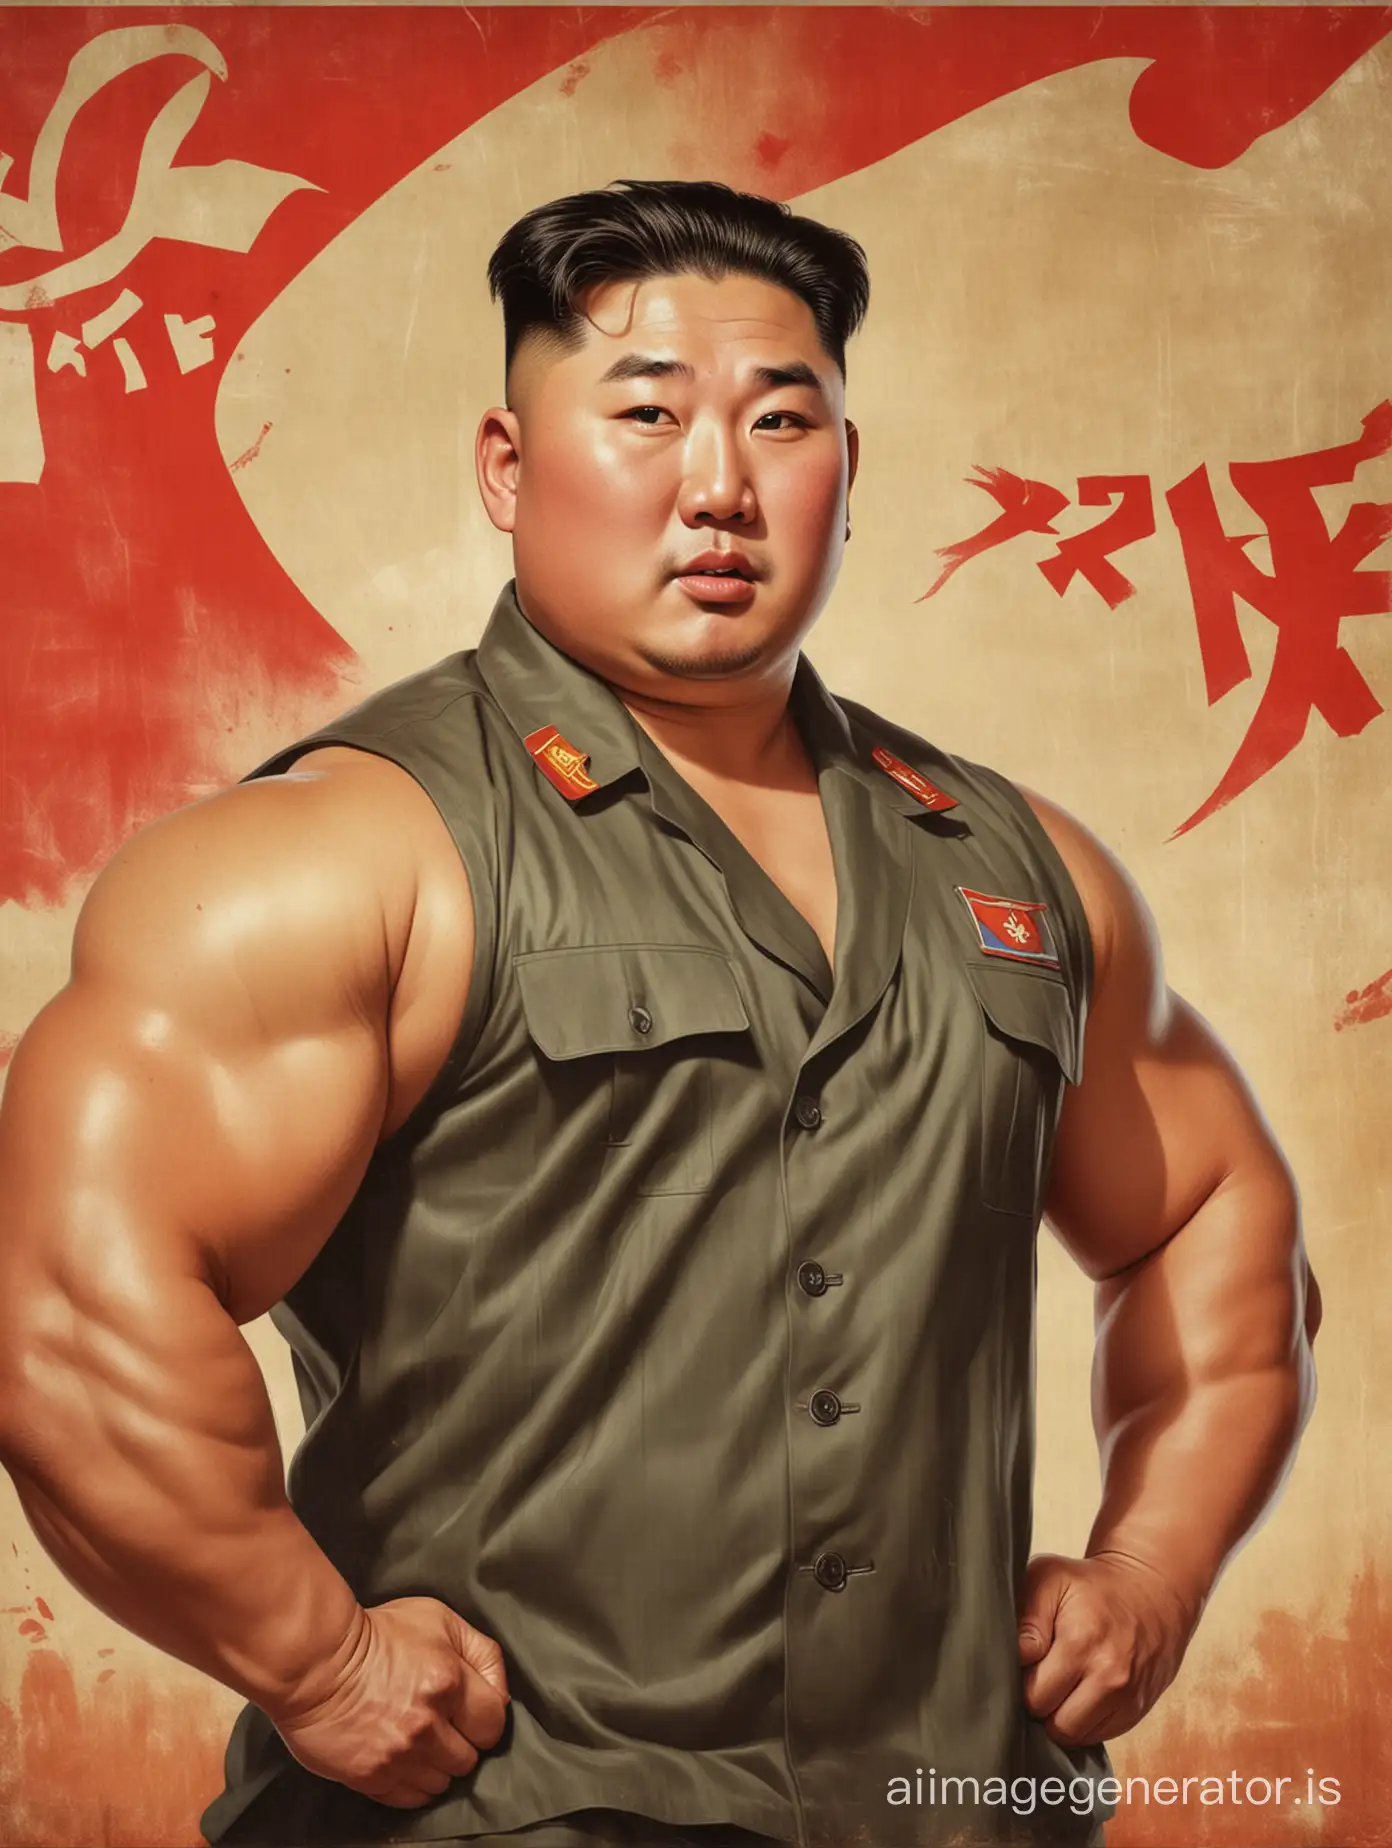 Kim-Jong-Un-MuscleBound-Leader-Pointing-Vintage-North-Korean-Propaganda-Style